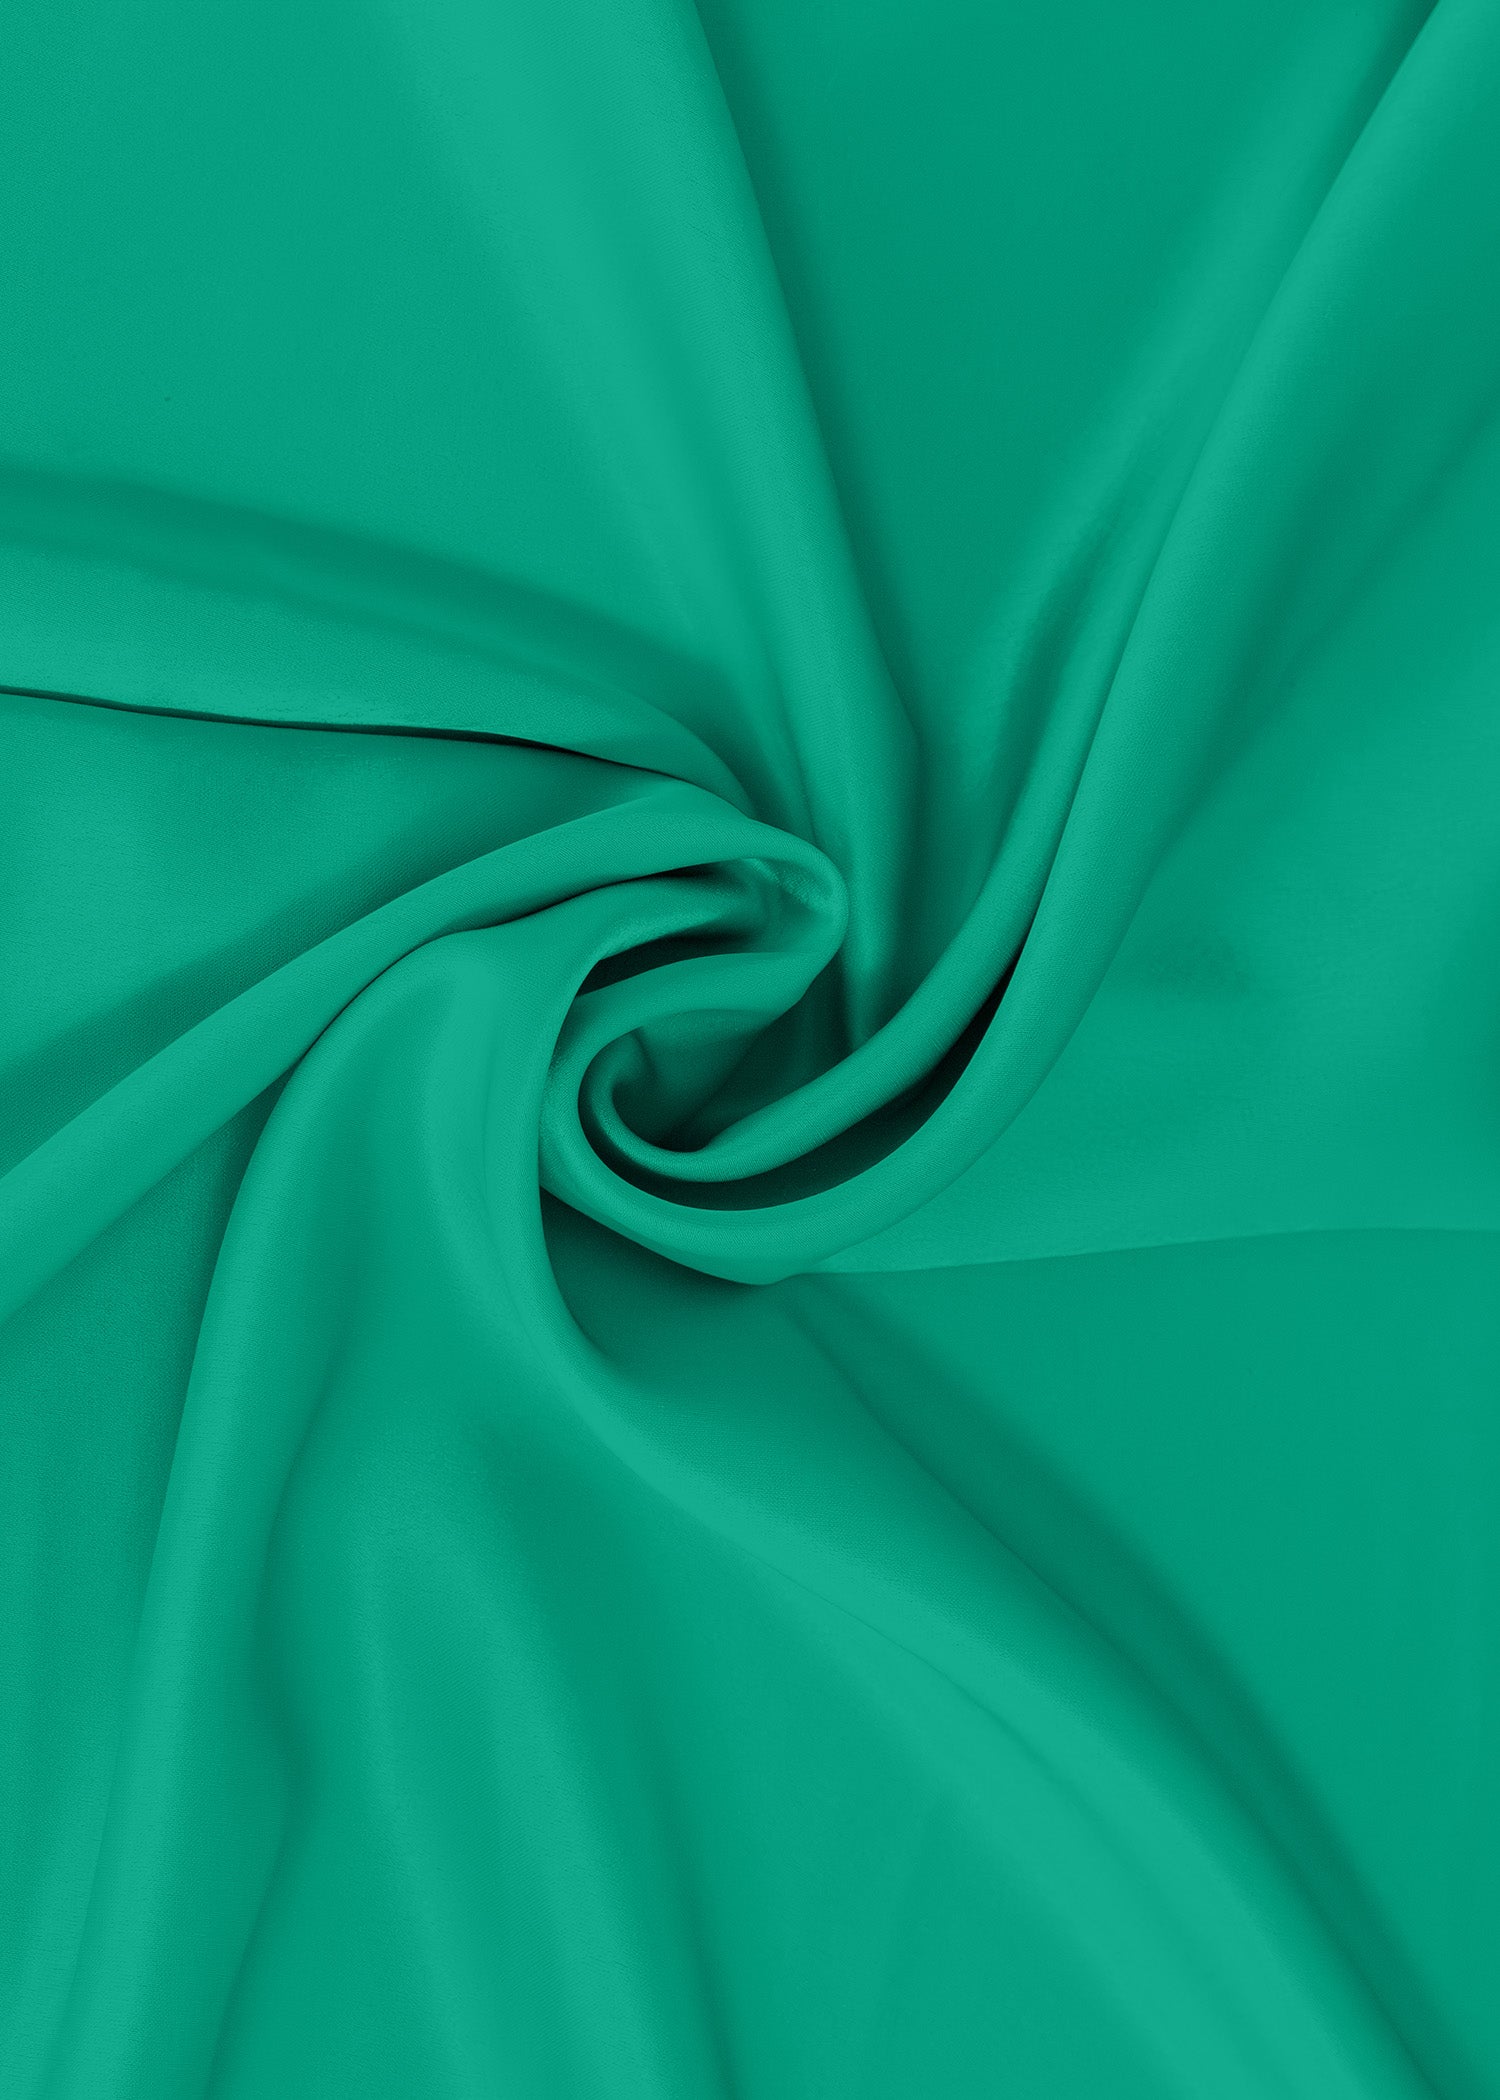 Swatch-Satin-Emerald